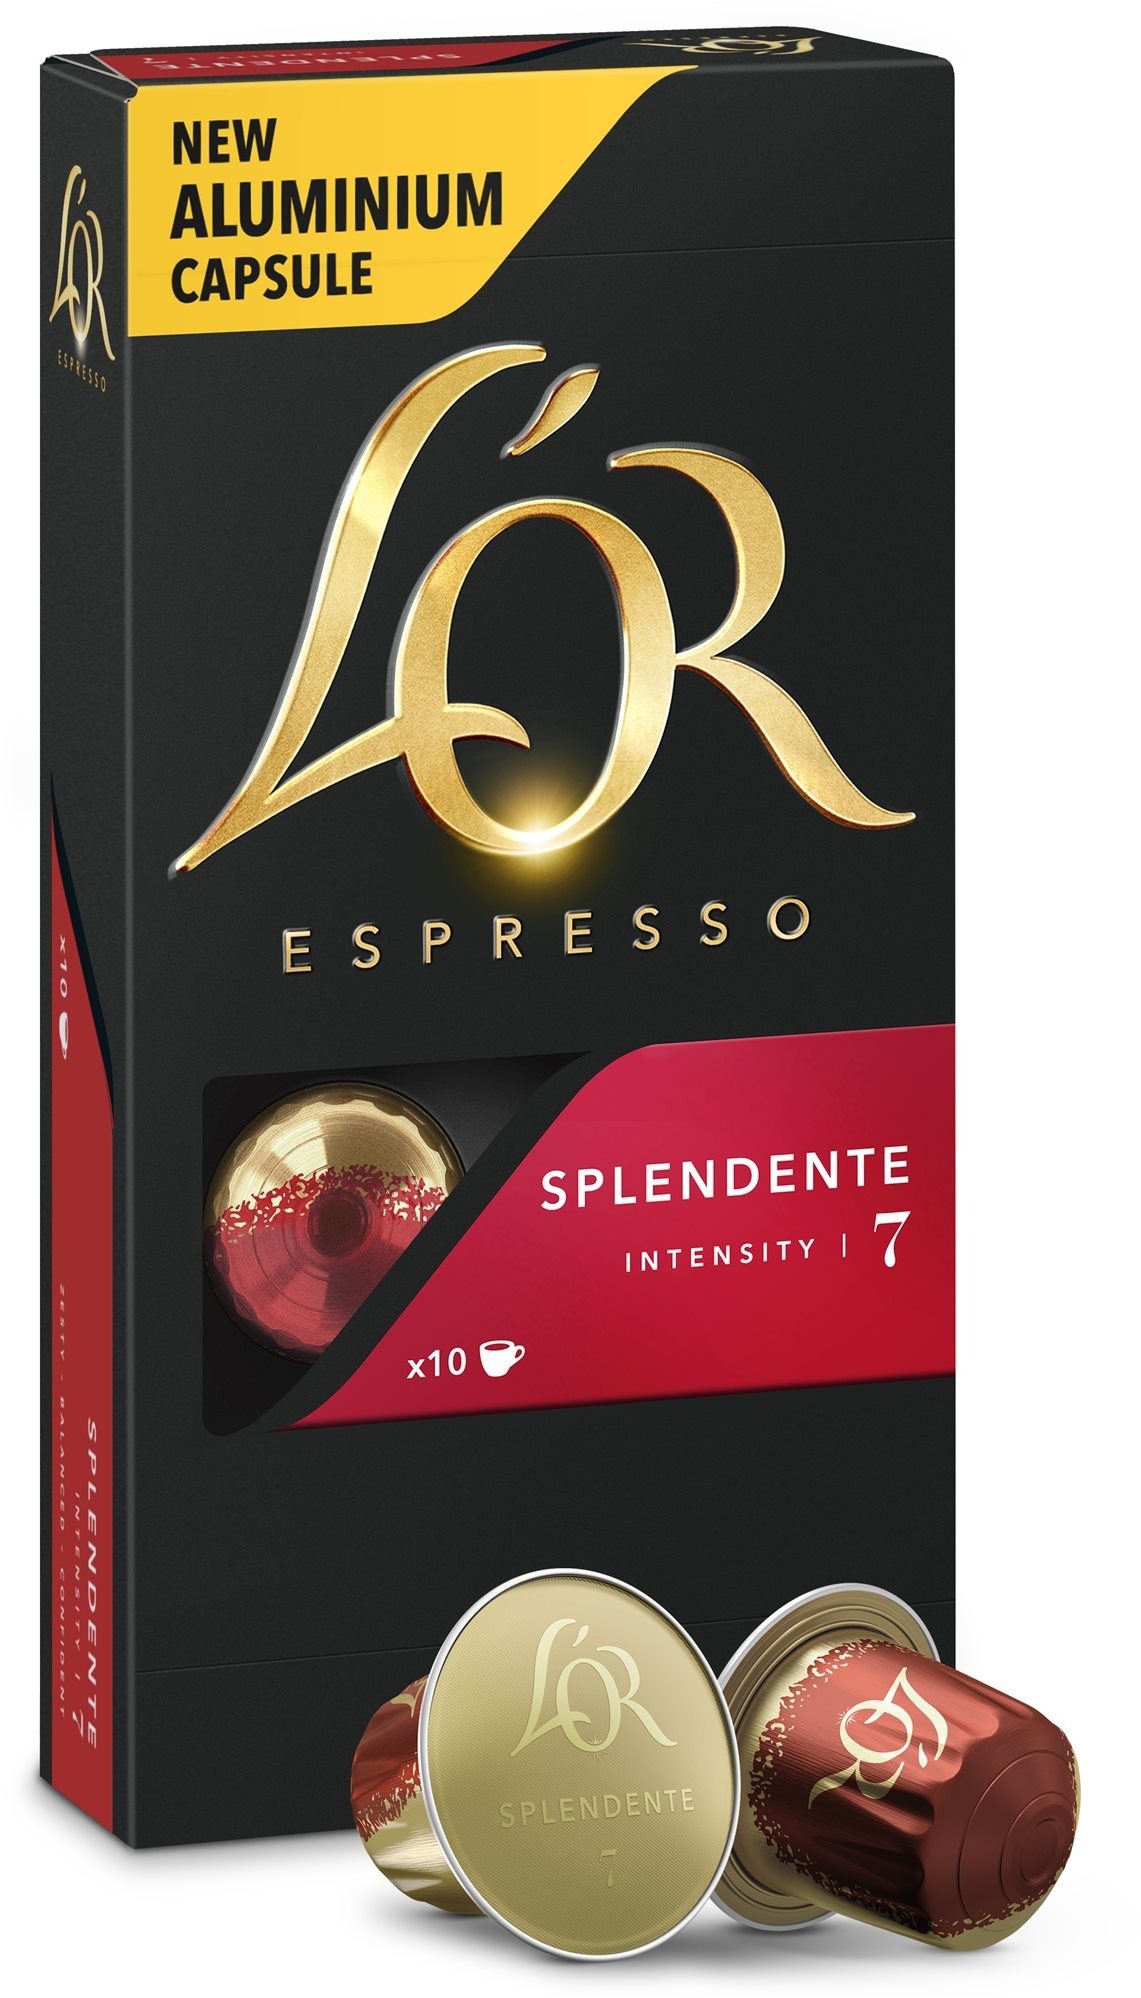 Kávékapszula L'OR Espresso Splendente 10 darab alumínium kapszula